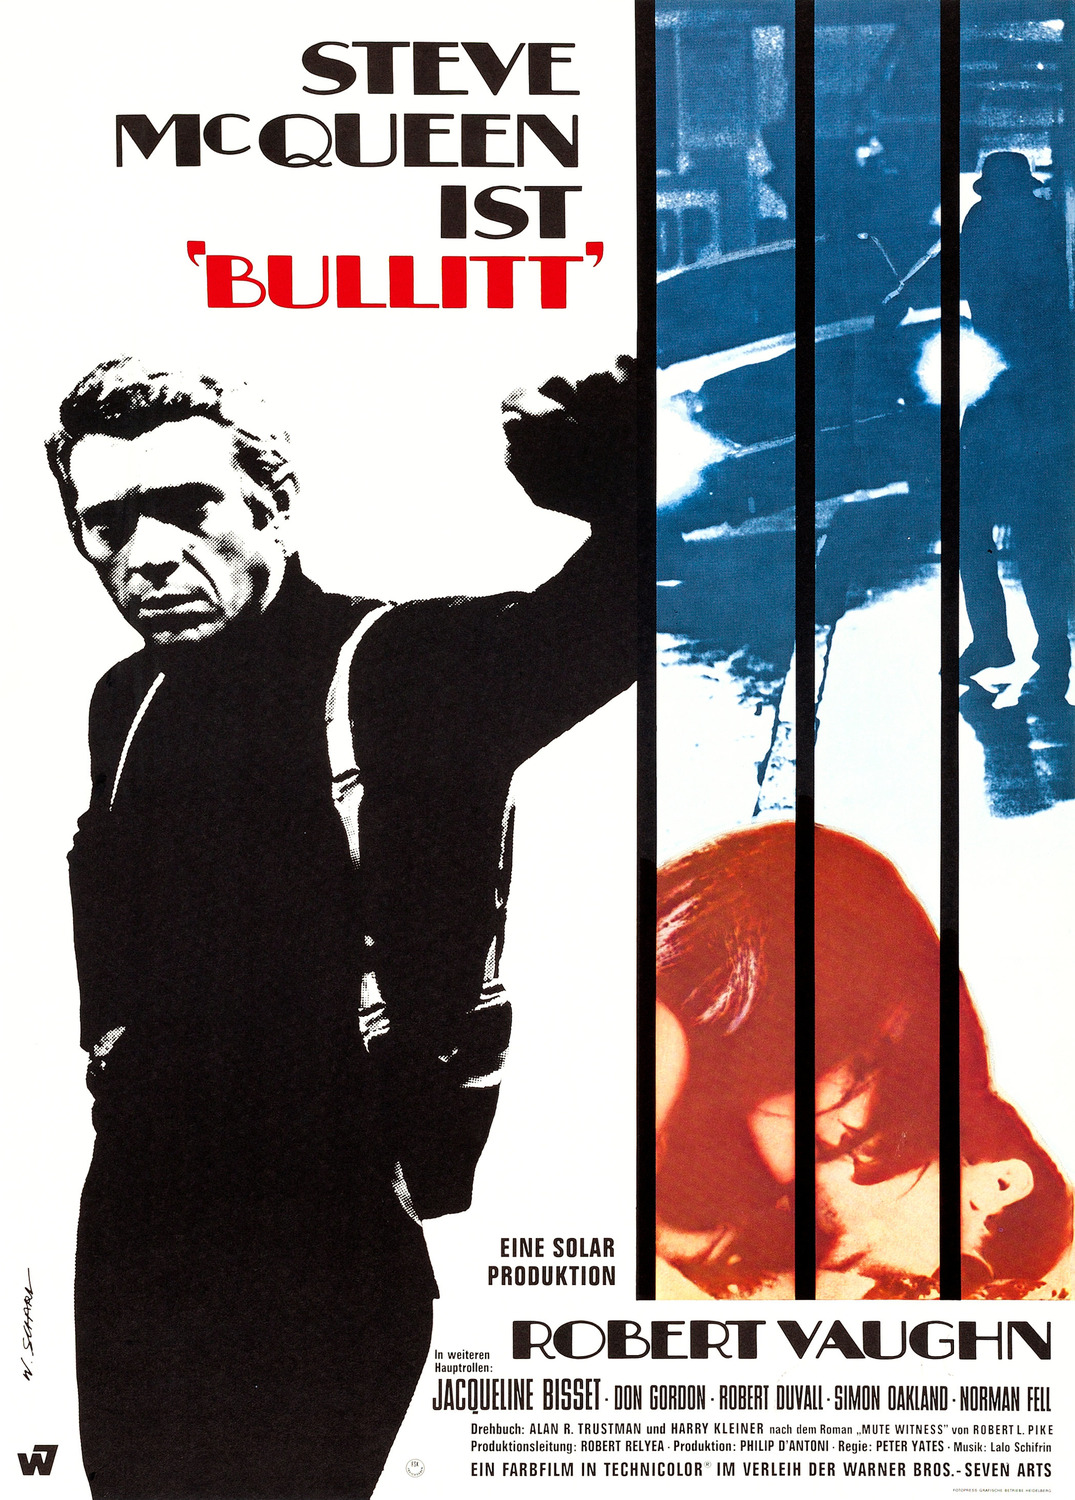 Extra Large Movie Poster Image for Bullitt (#16 of 19)